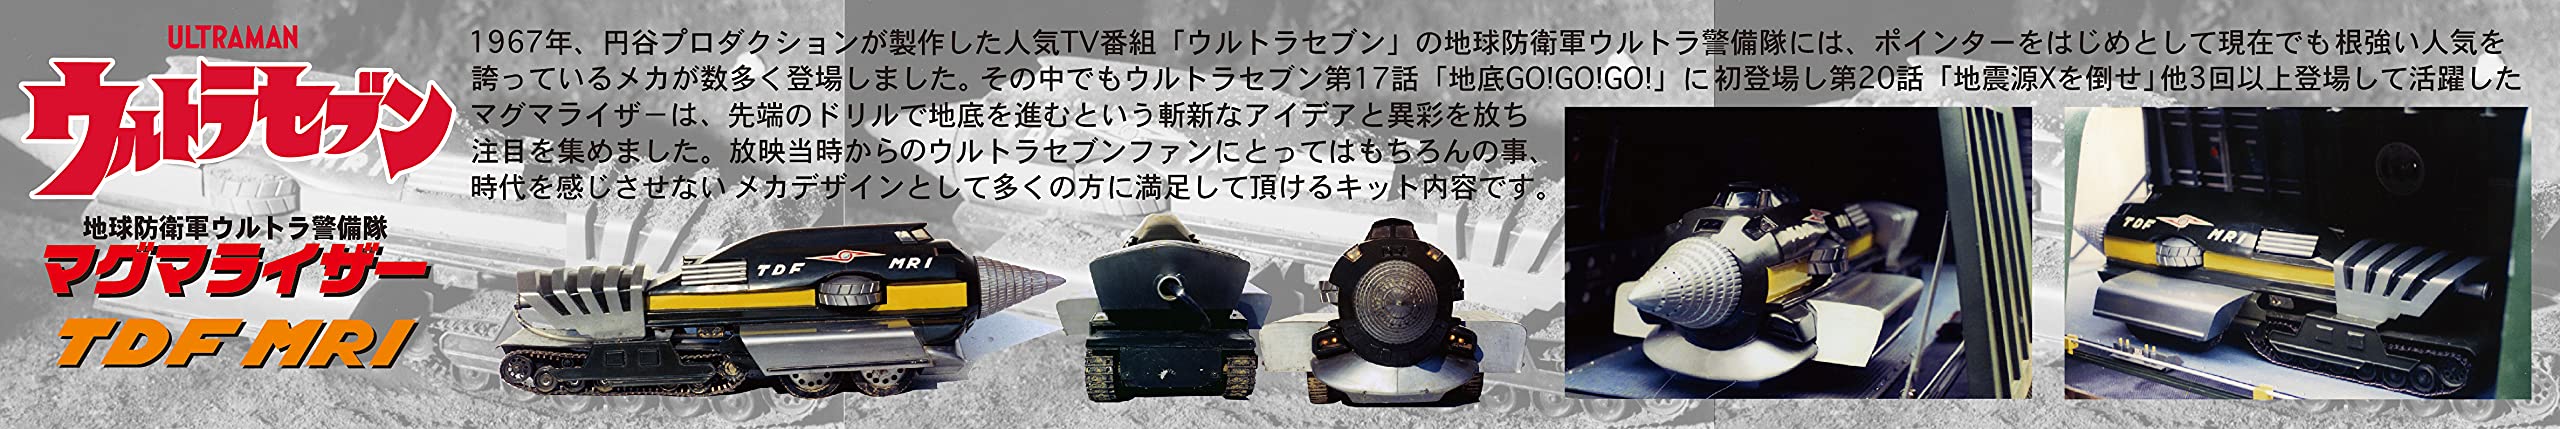 Fujimi Model Ultra Earth Defense Force Ultra Guard Magmalizer Tdf Mri